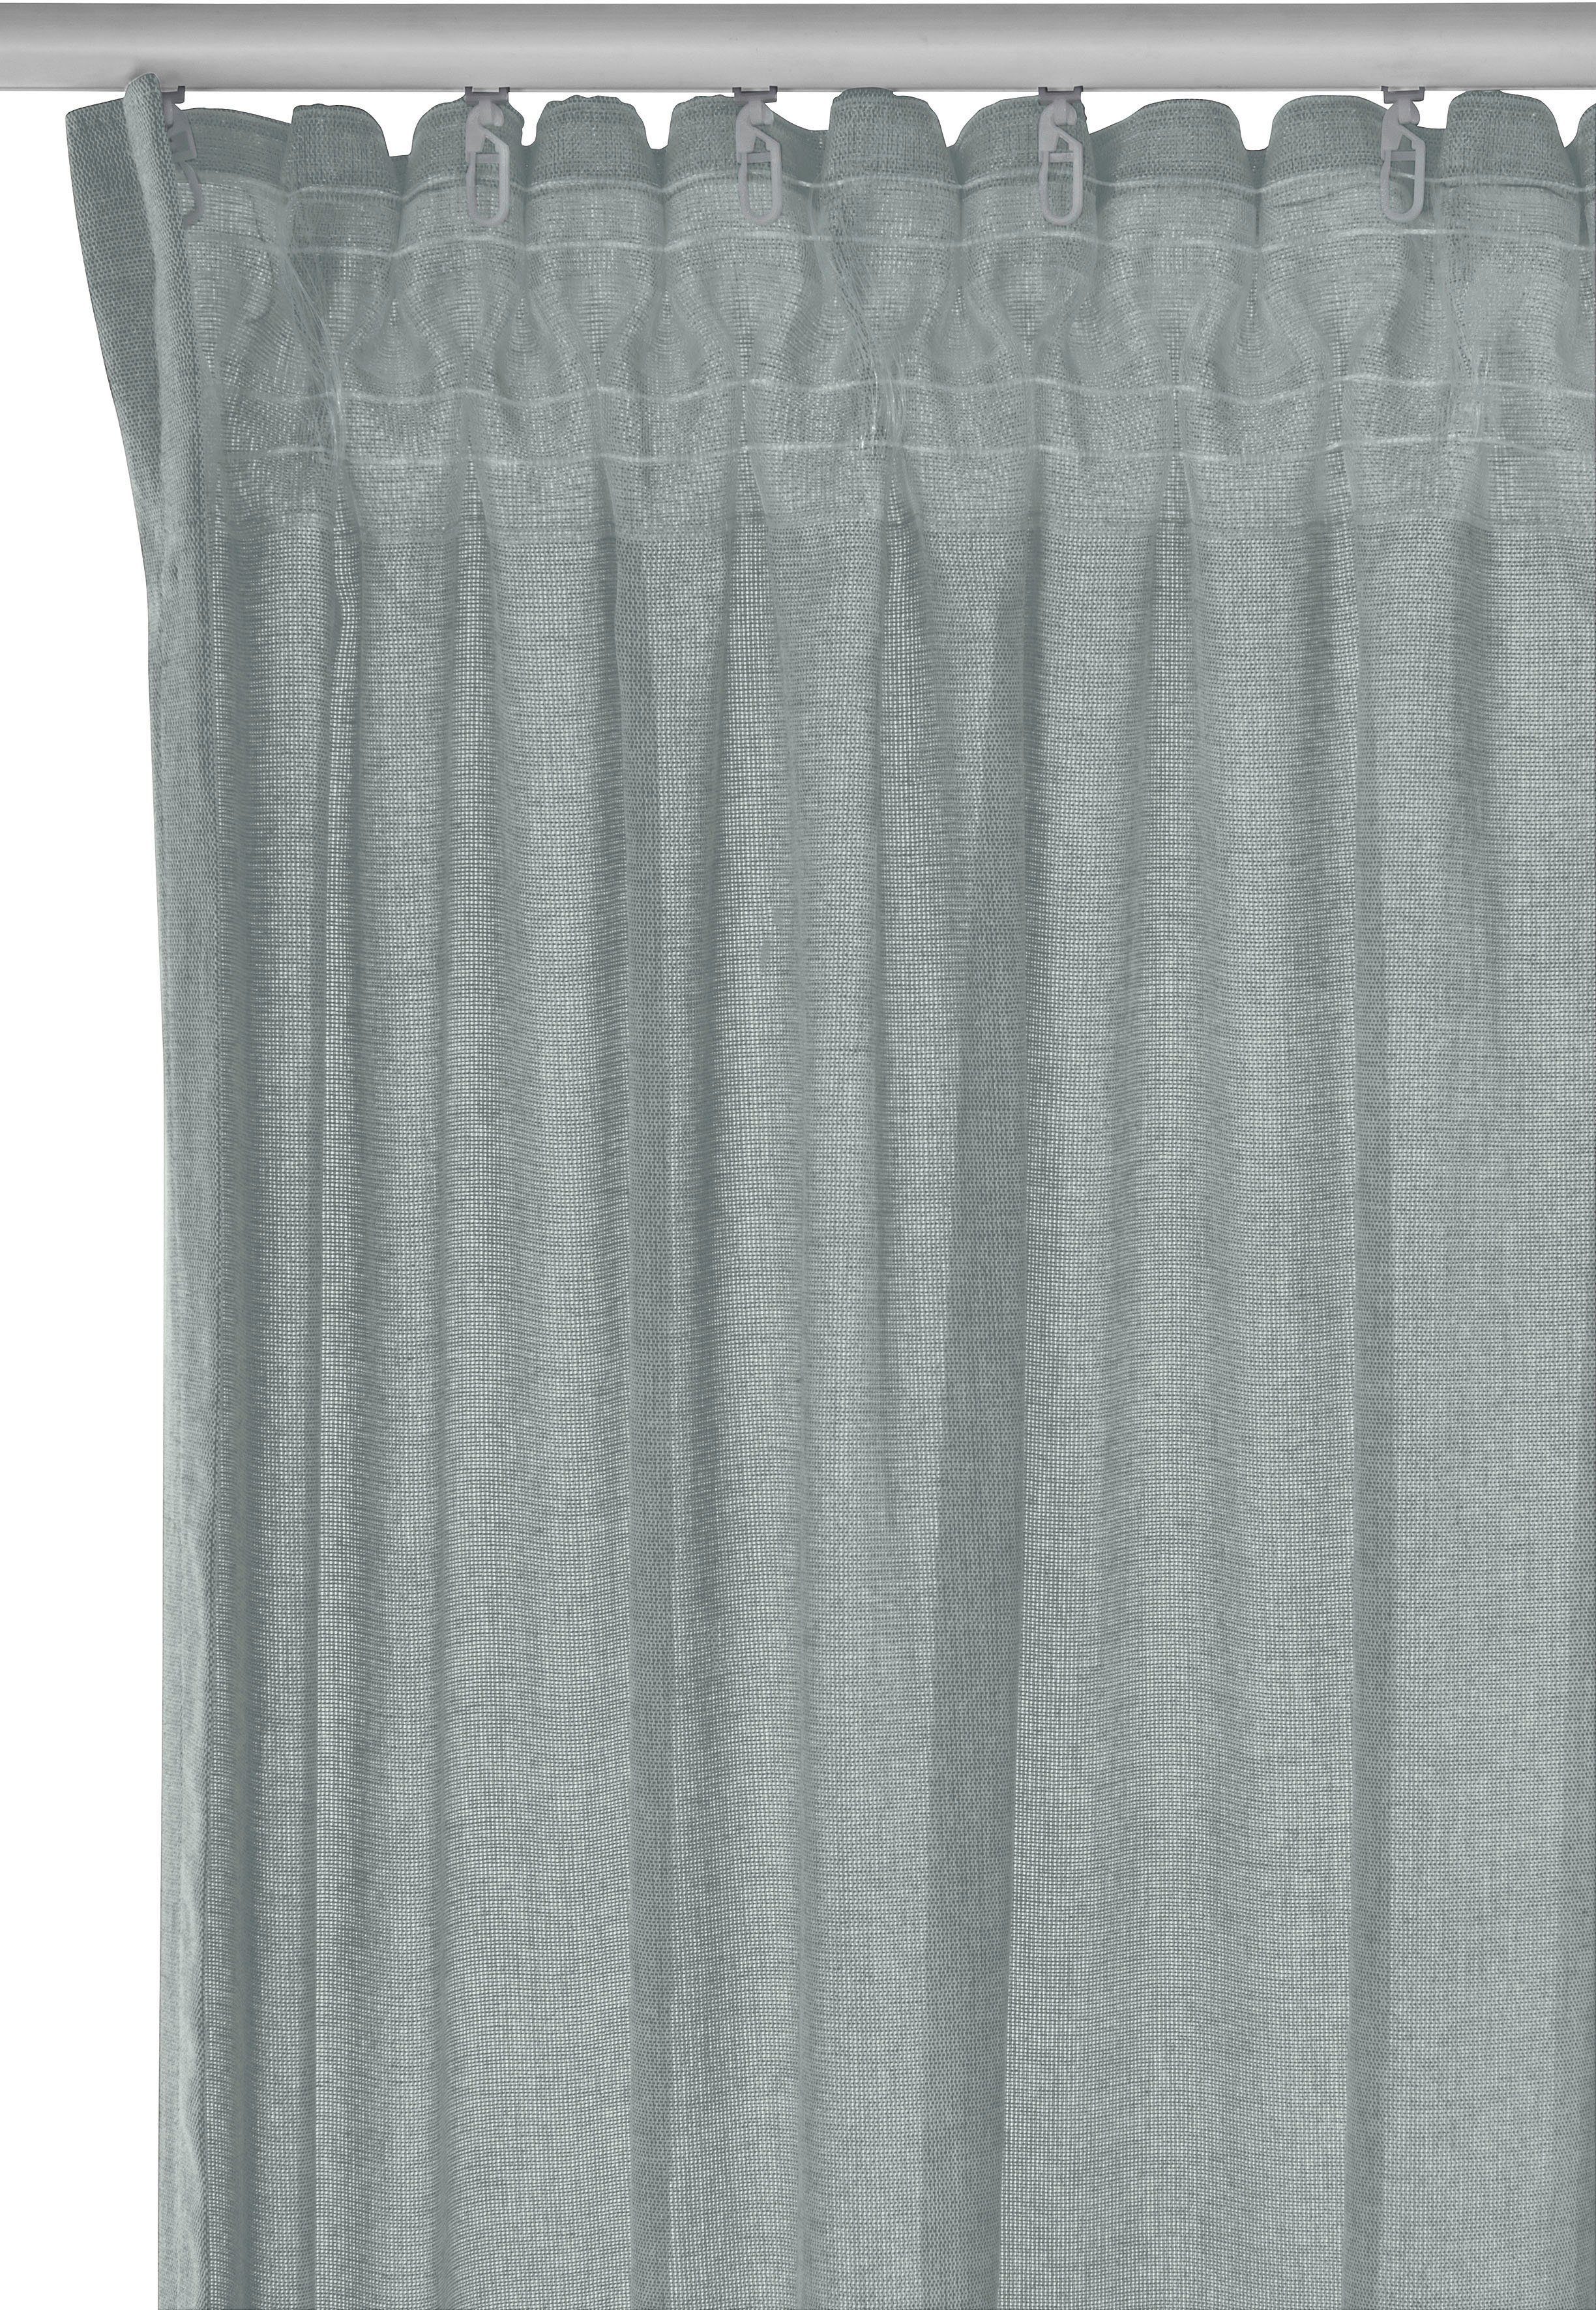 LeGer verschiedene halbtransparent, Lanea, Home mint (1 1 Größen Vorhang Schal, Multifunktionsband Leinenoptik, St), Lena Gercke, by